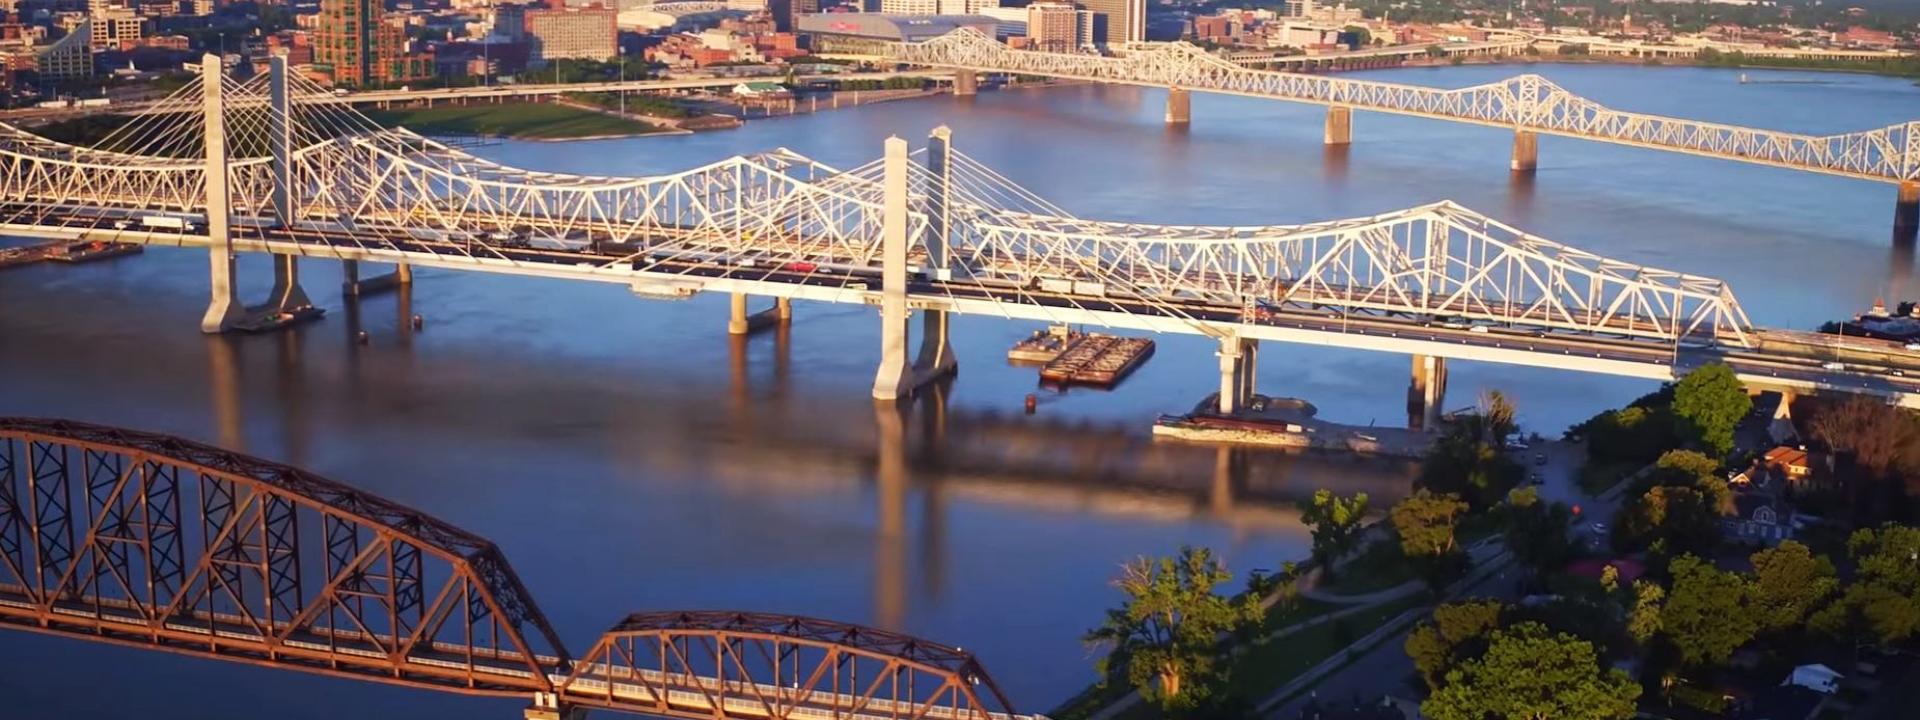 Louisville Council members want tolls taken off Ohio River bridges